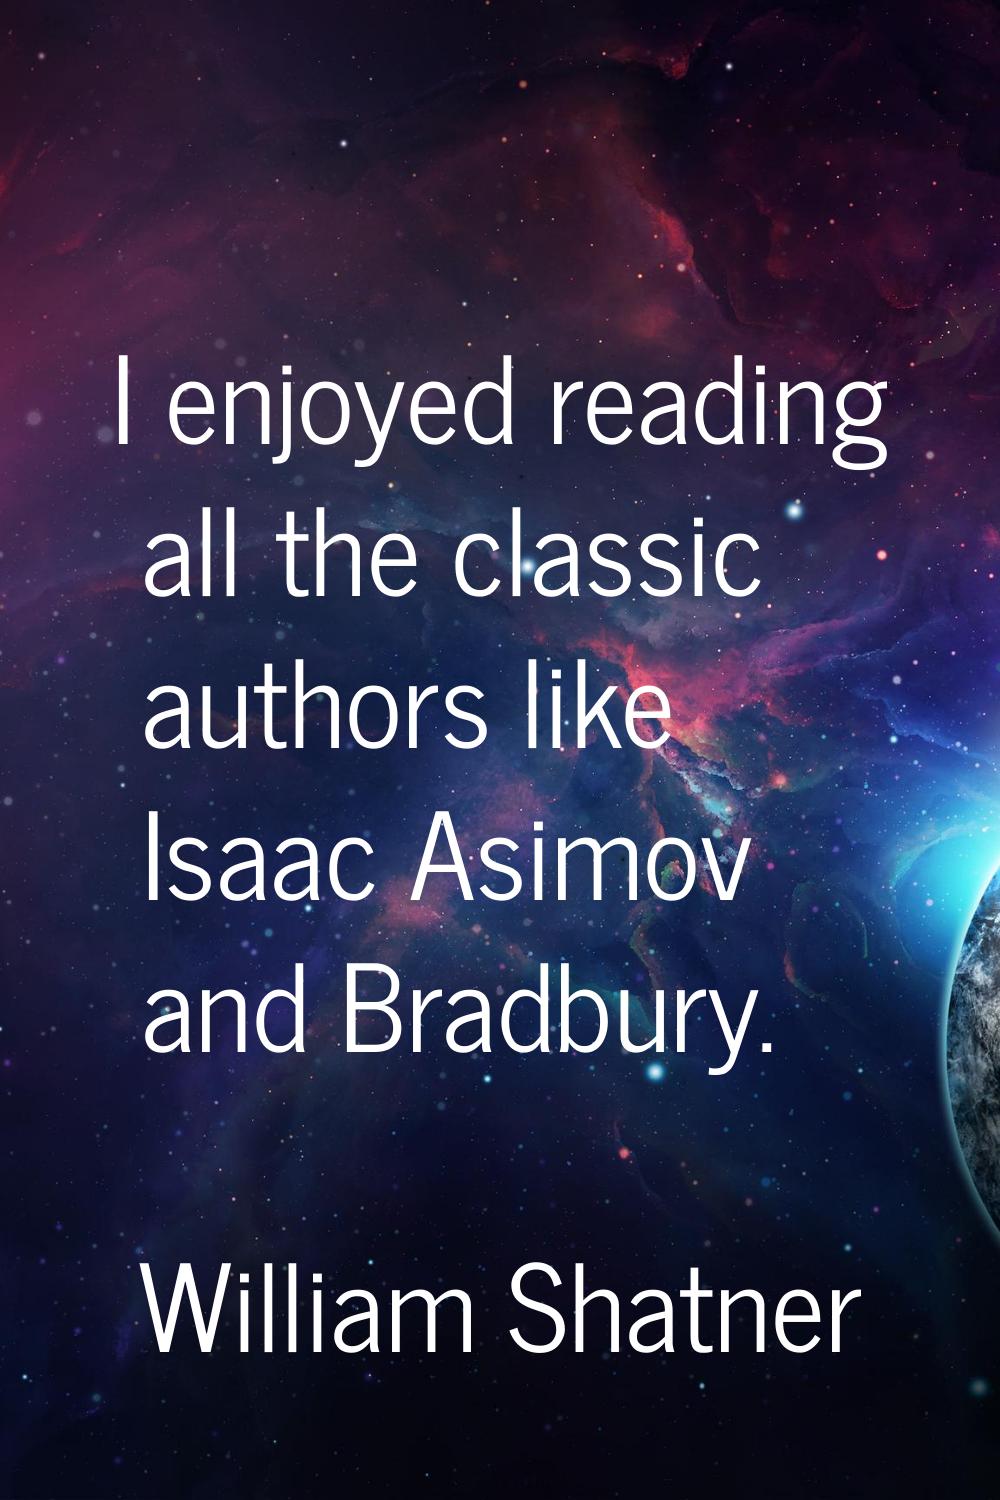 I enjoyed reading all the classic authors like Isaac Asimov and Bradbury.